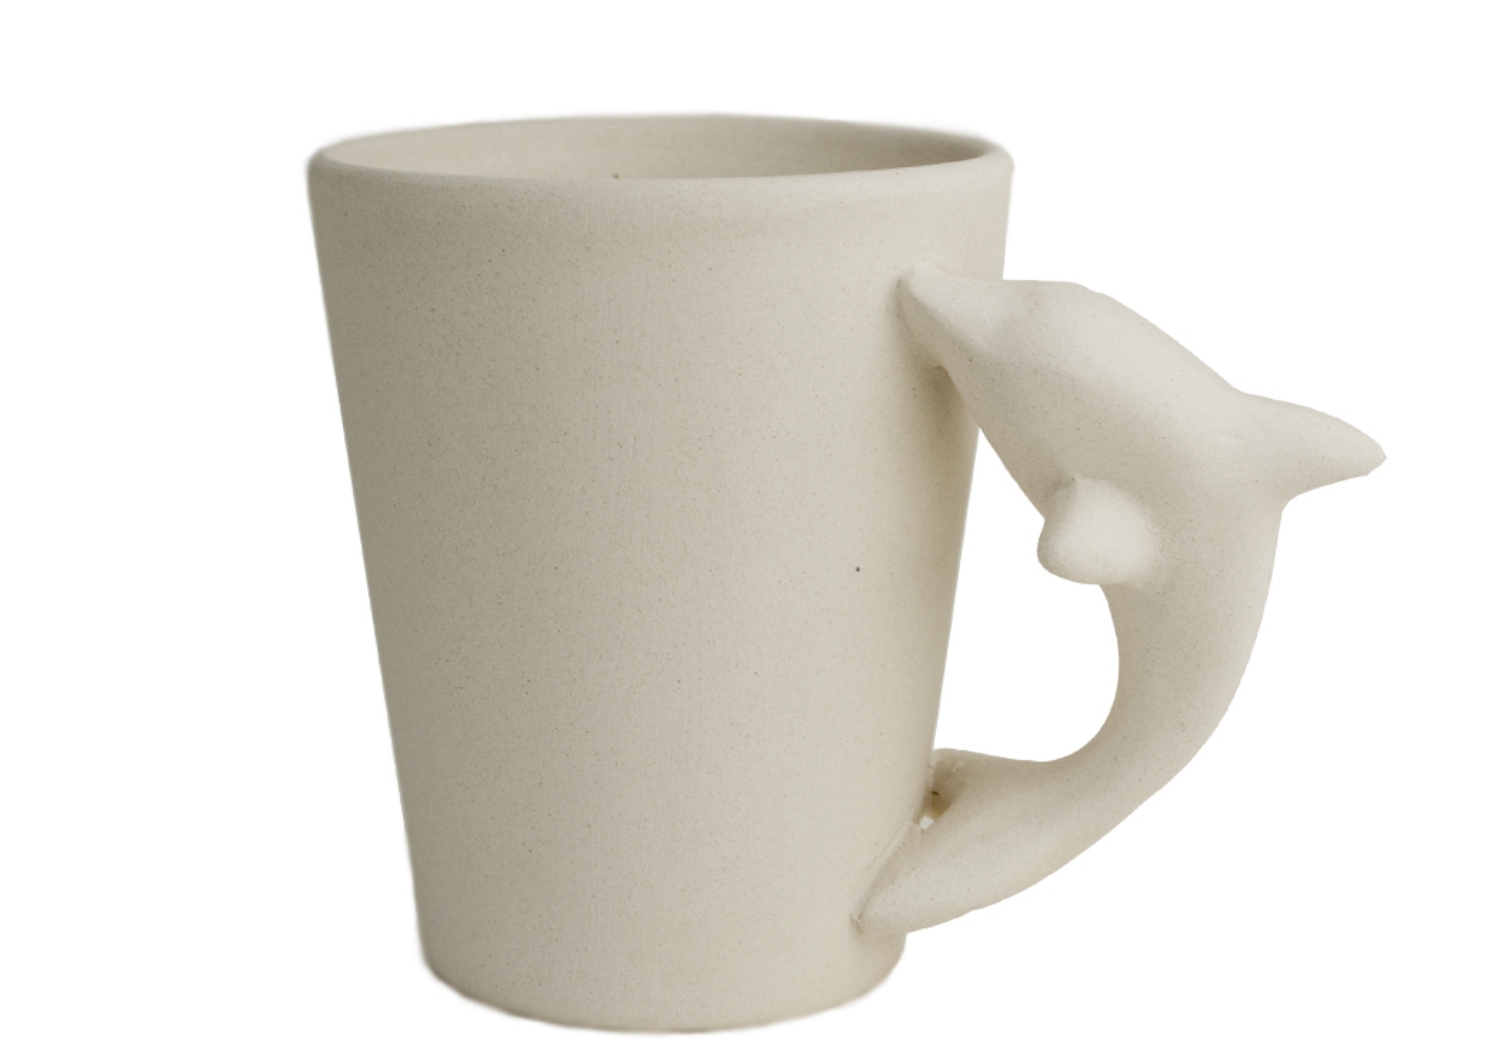 Dolphin Coffee Mug